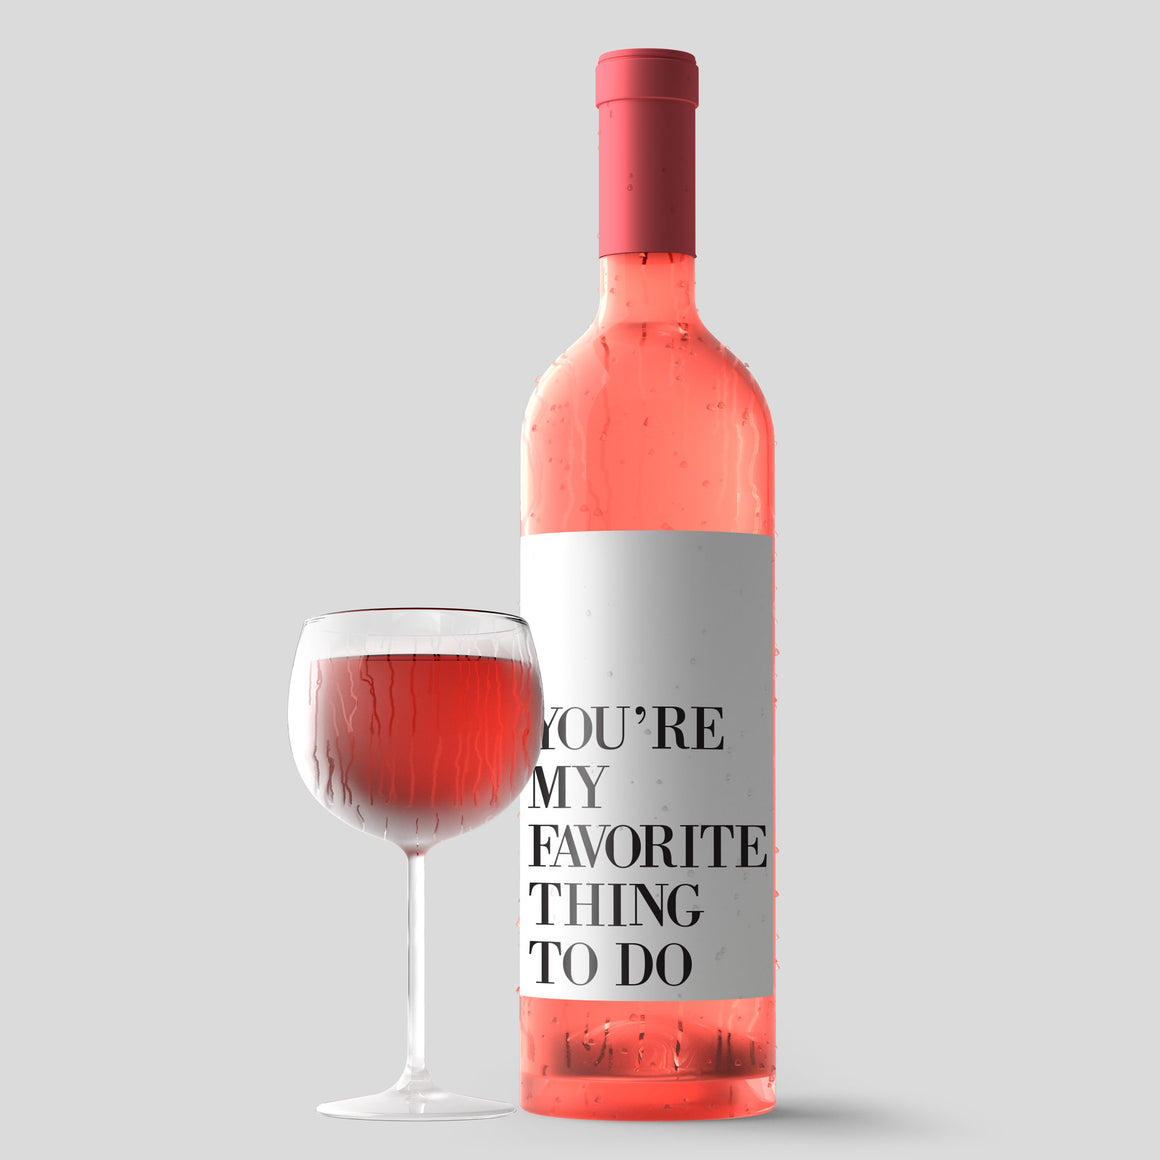 Funny Valentine's Day Wine Label + Card